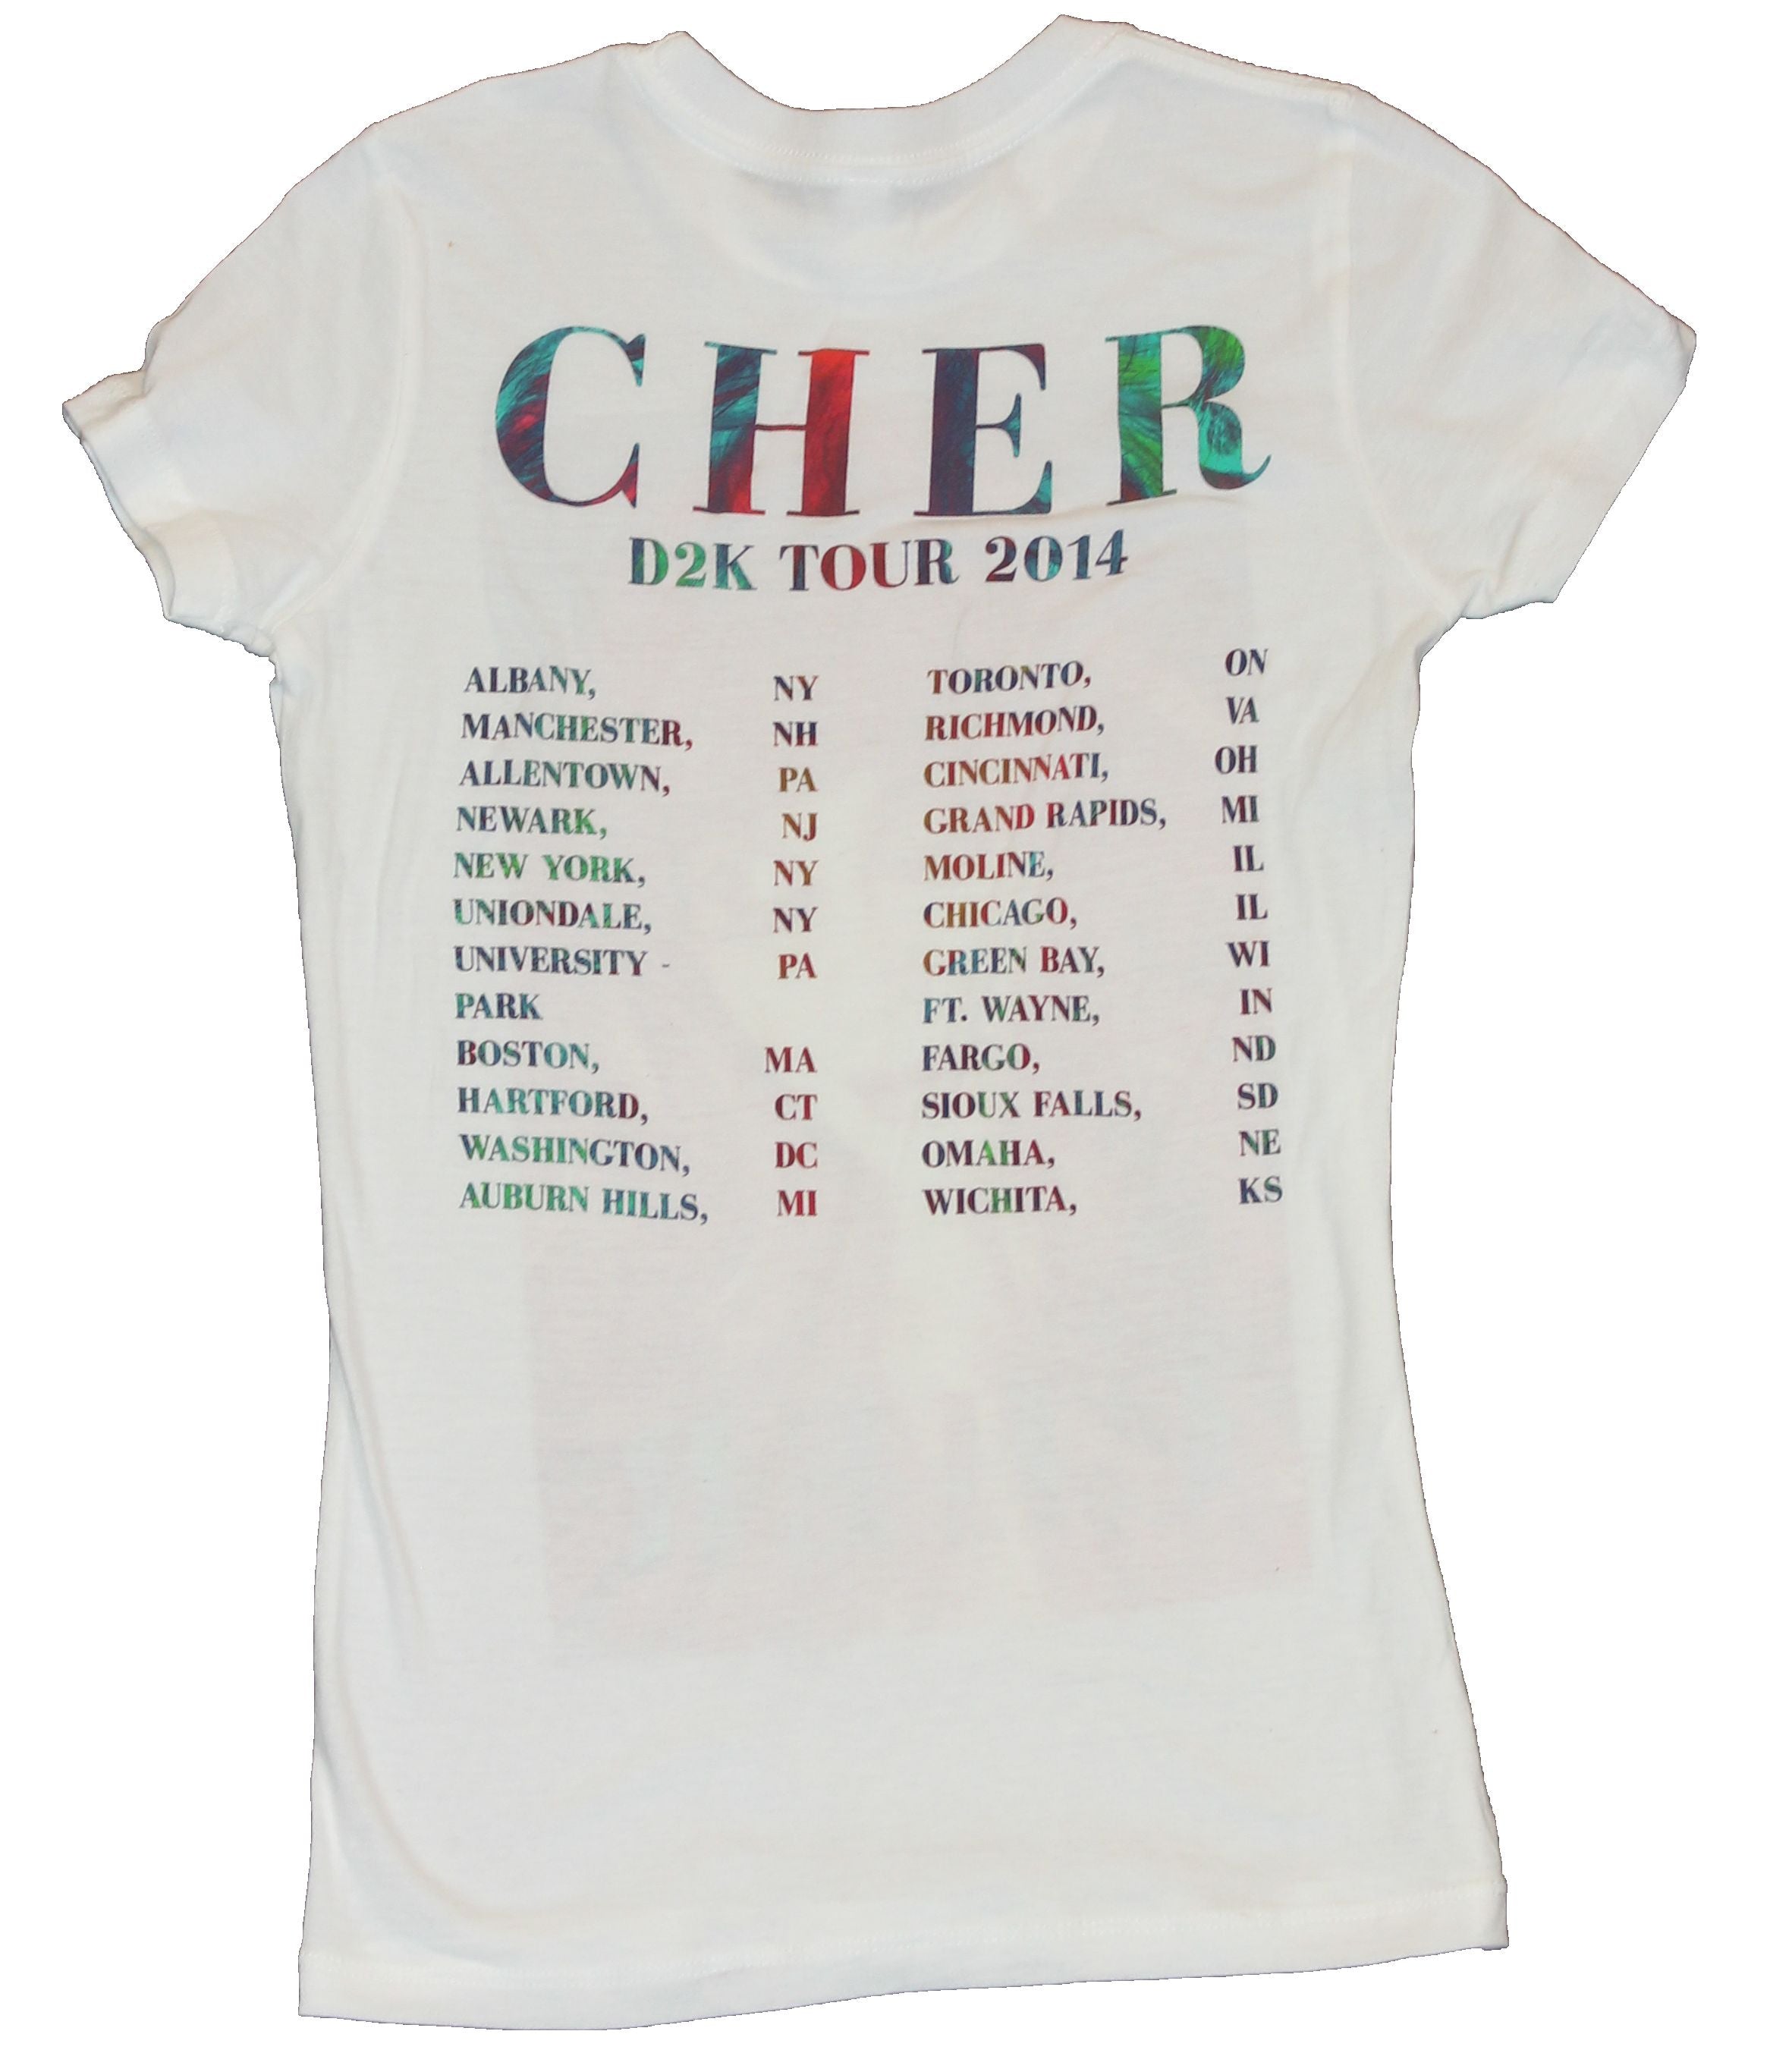 Cher Girls Juniors T-Shirt - Red Haired Photo Box Image DK2 Tour